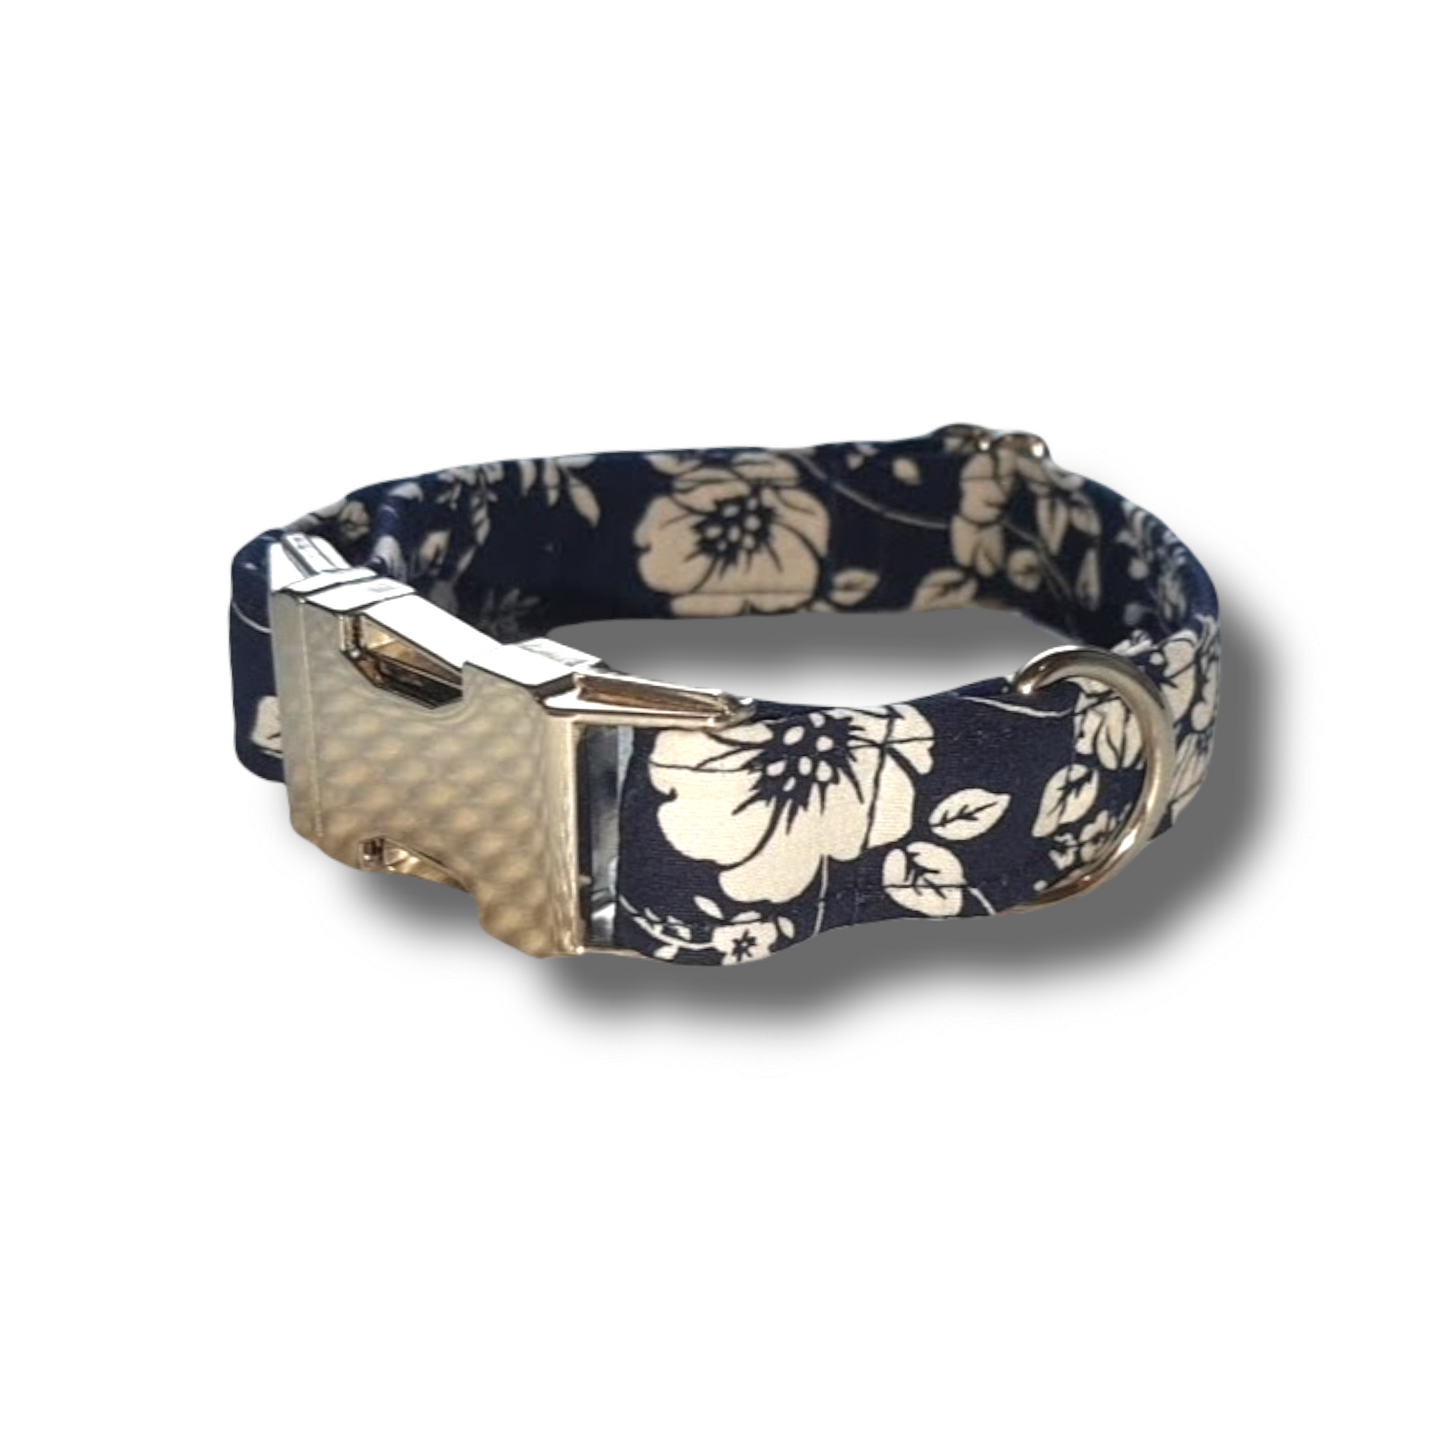 Floral print dog collar/lead